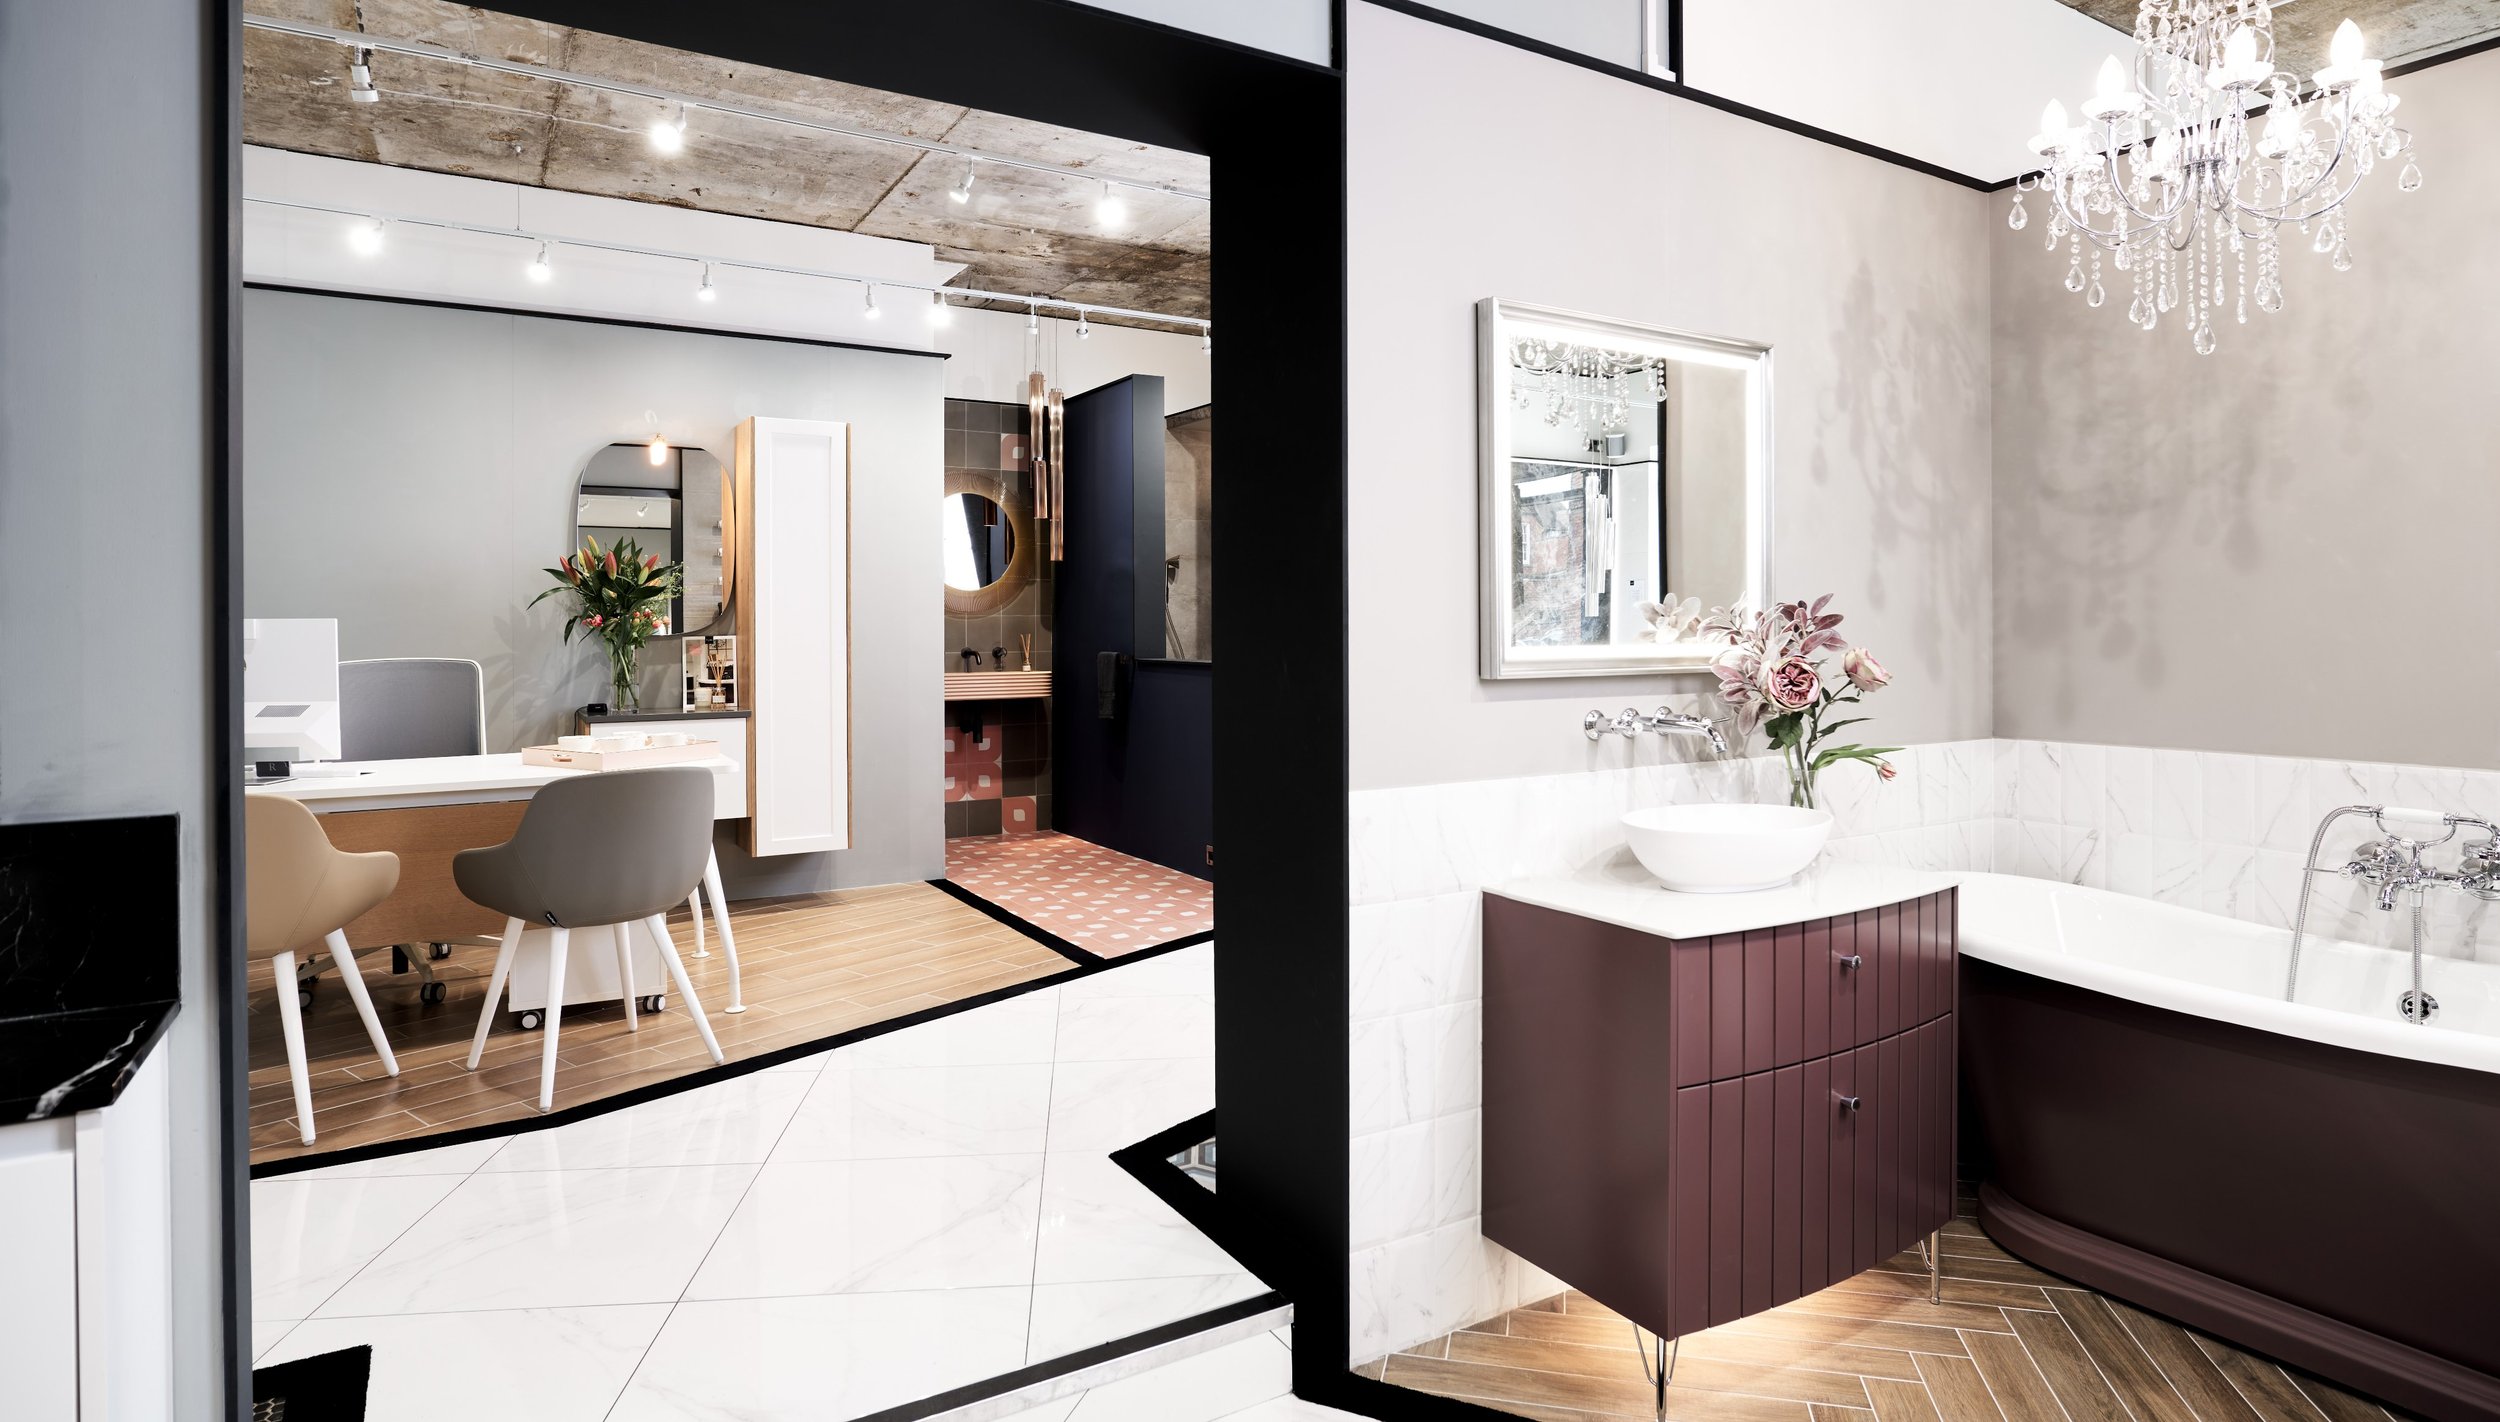 A bathroom design sample by Ripples Wokingham Showroom Designers